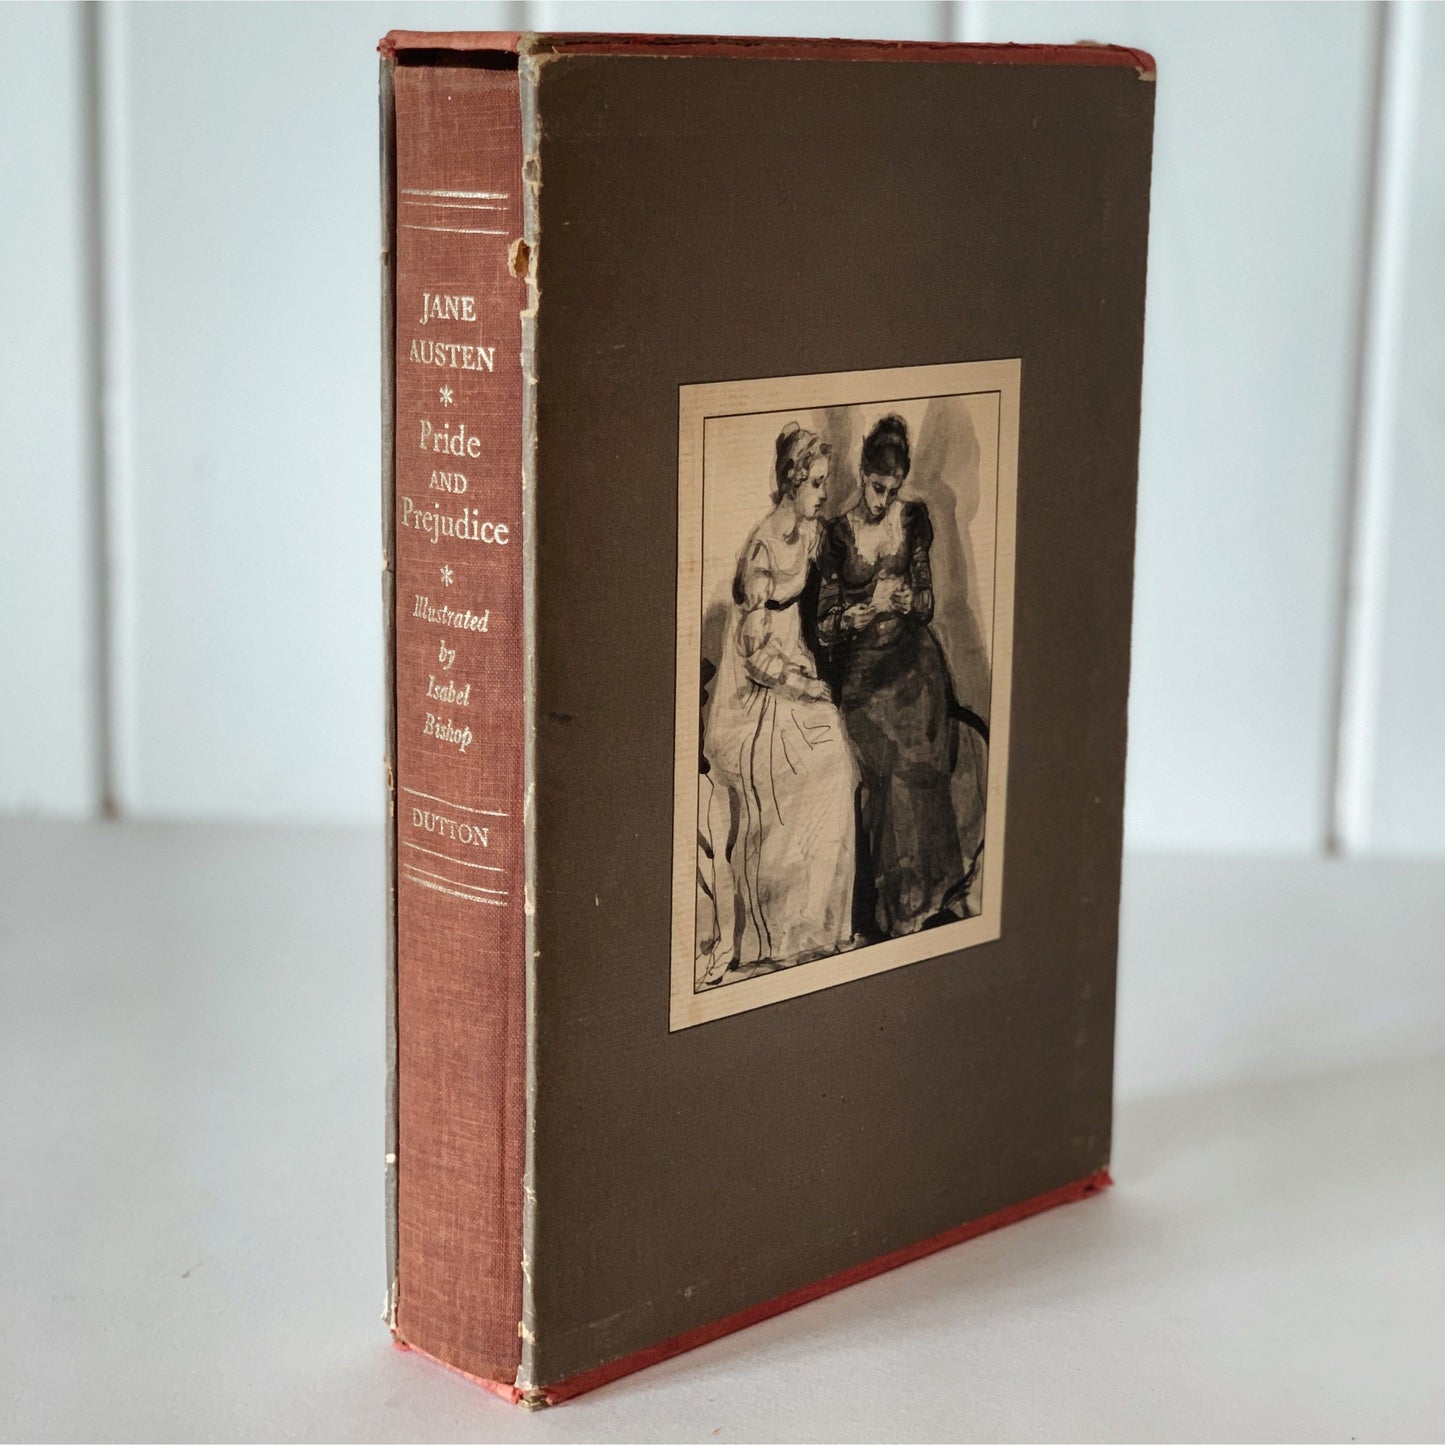 Pride and Prejudice, Jane Austen, Dutton Slipcased Edition, 1976, Illustrated